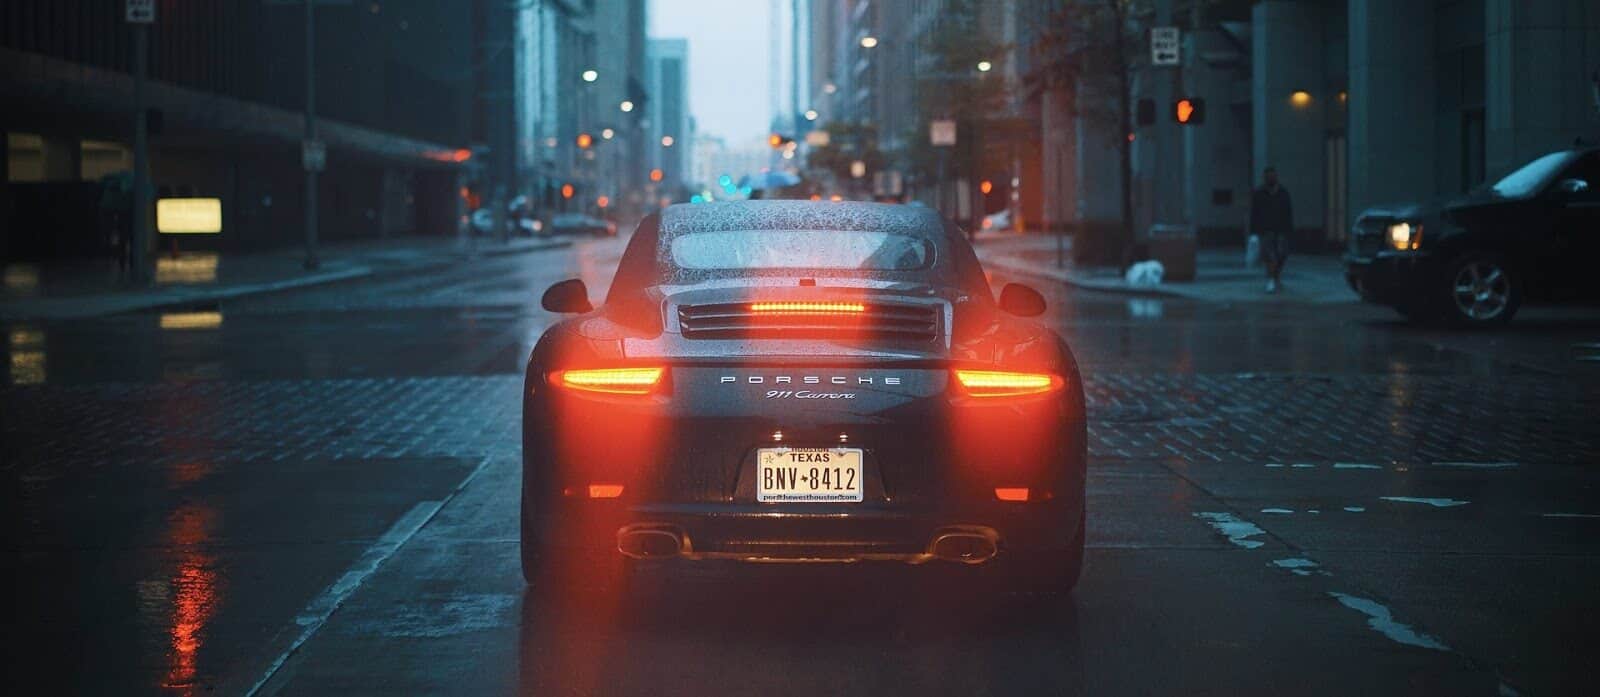 Car taillights on a rainy city street